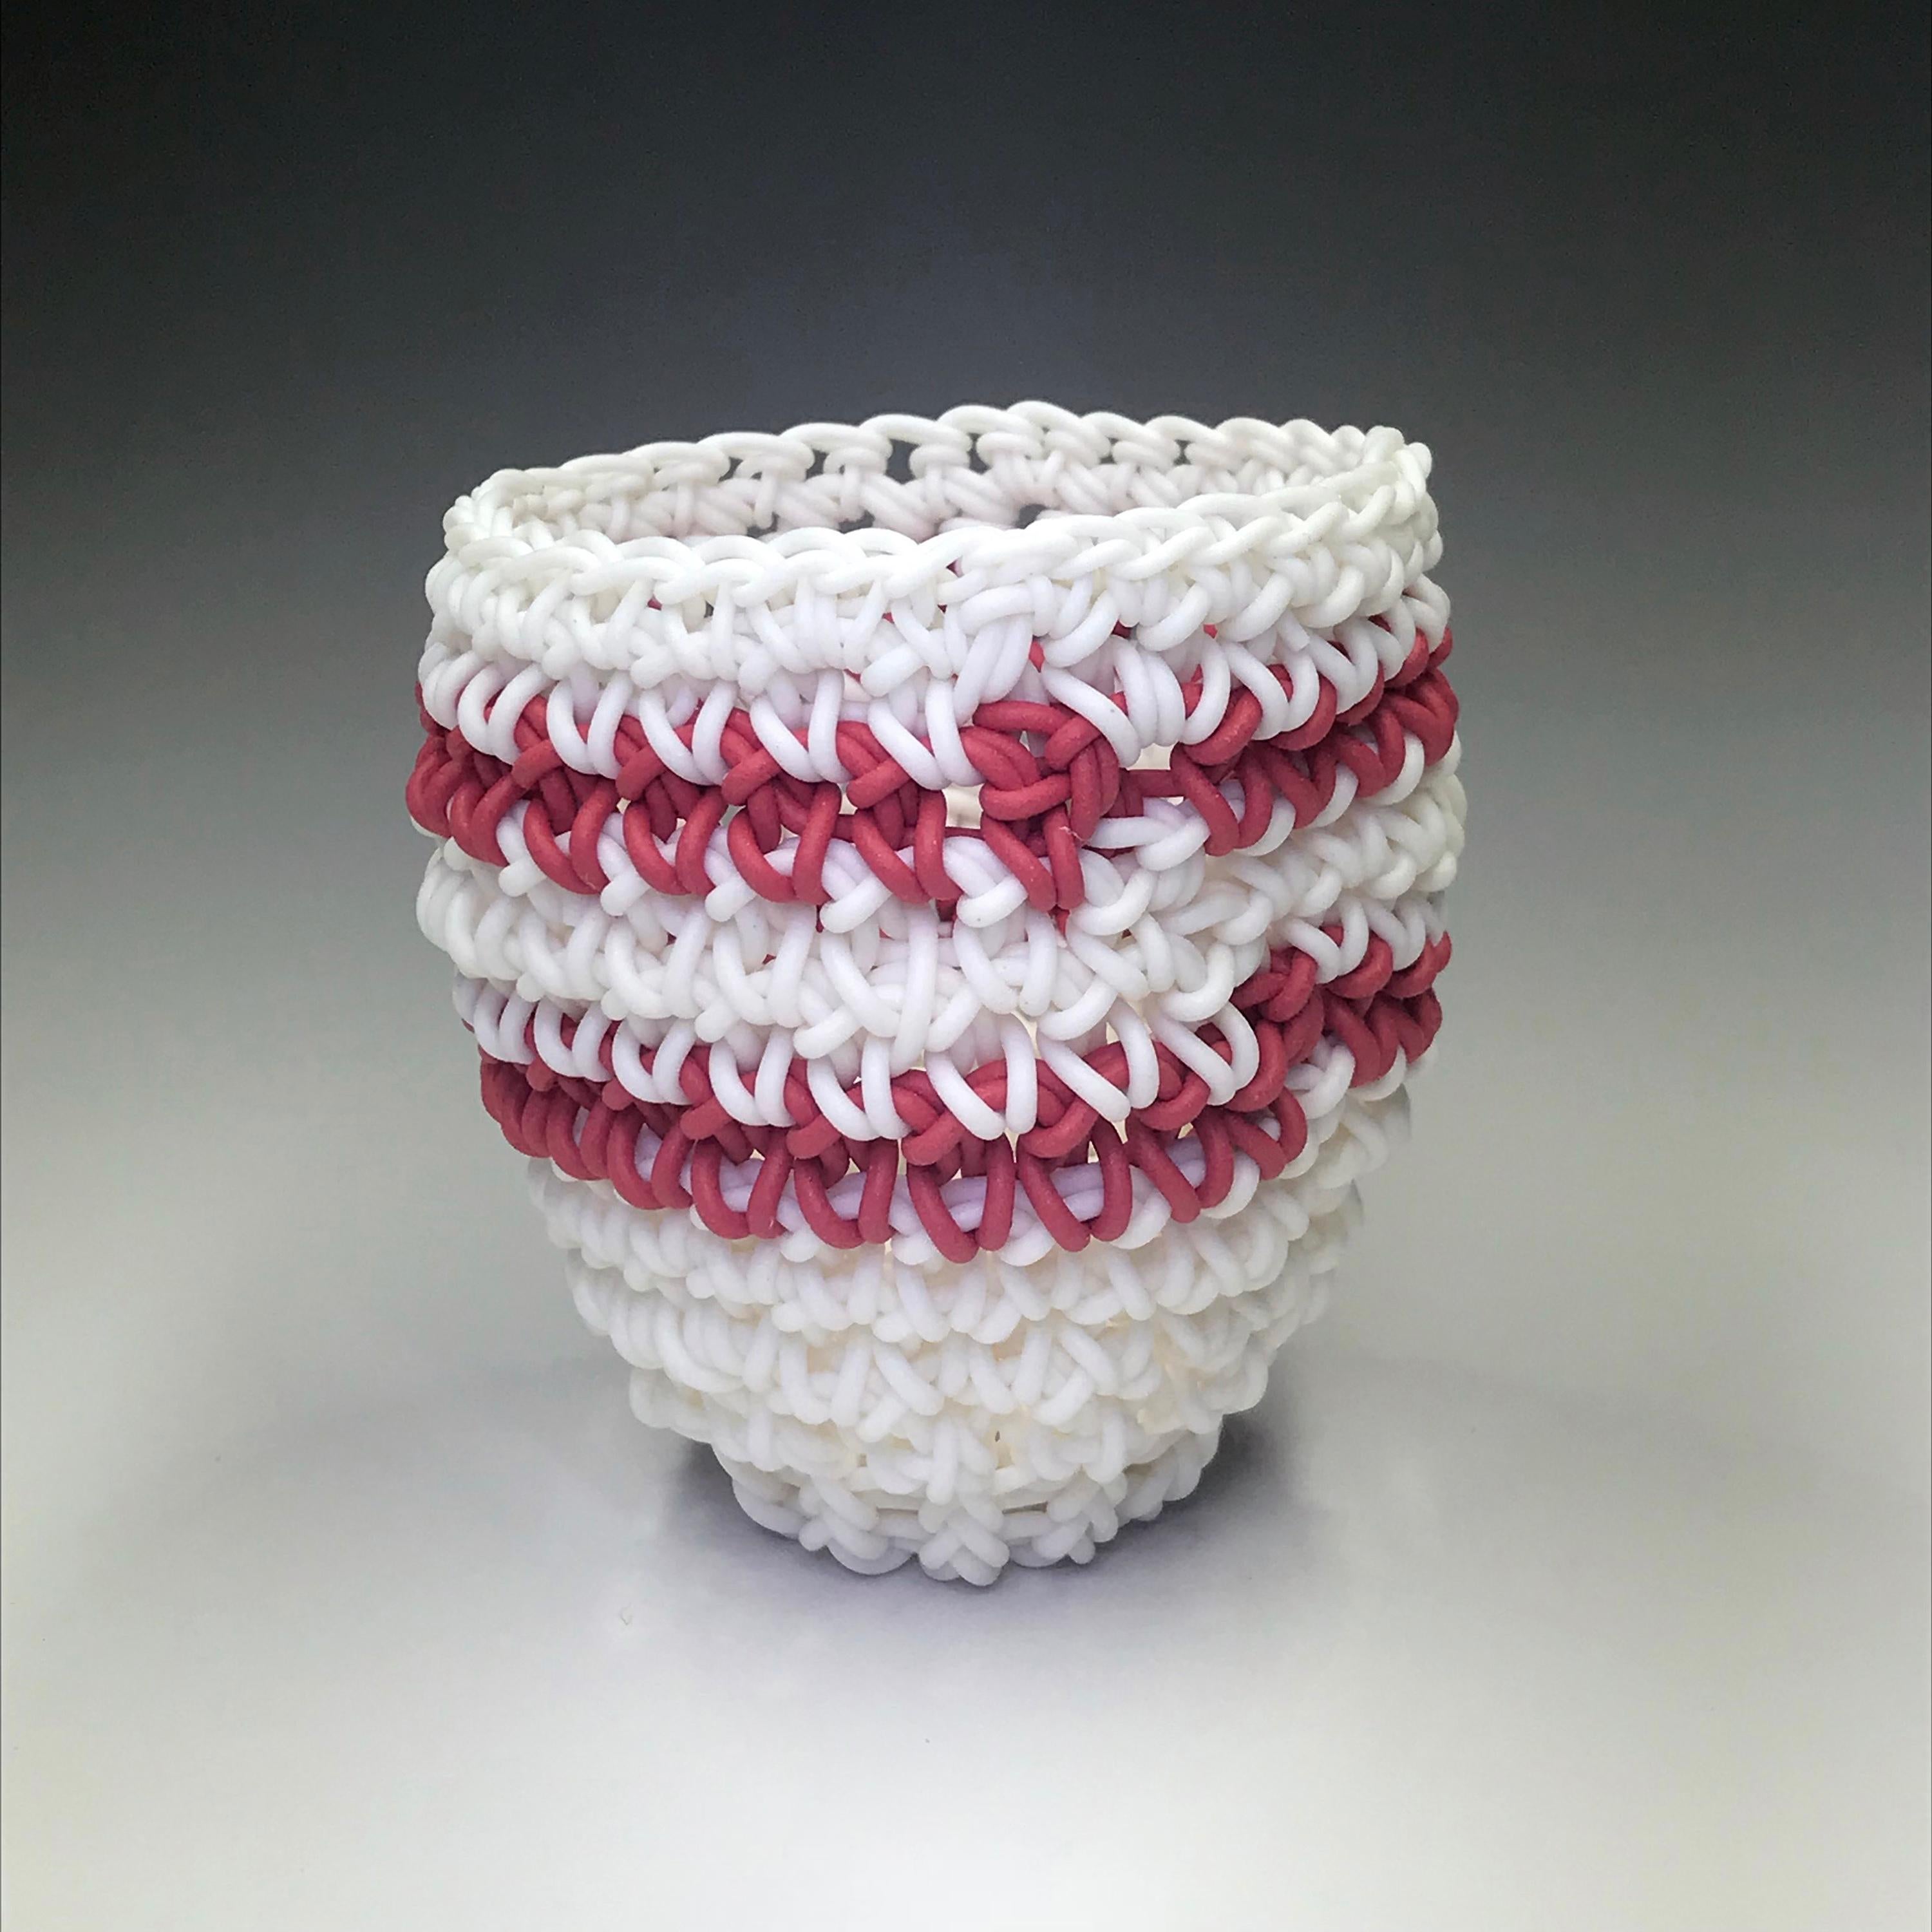 Hand Crocheted Porcelain "Tea Bowl", Unique Contemporary Ceramic Sculpture - Mixed Media Art by Jeremy Brooks